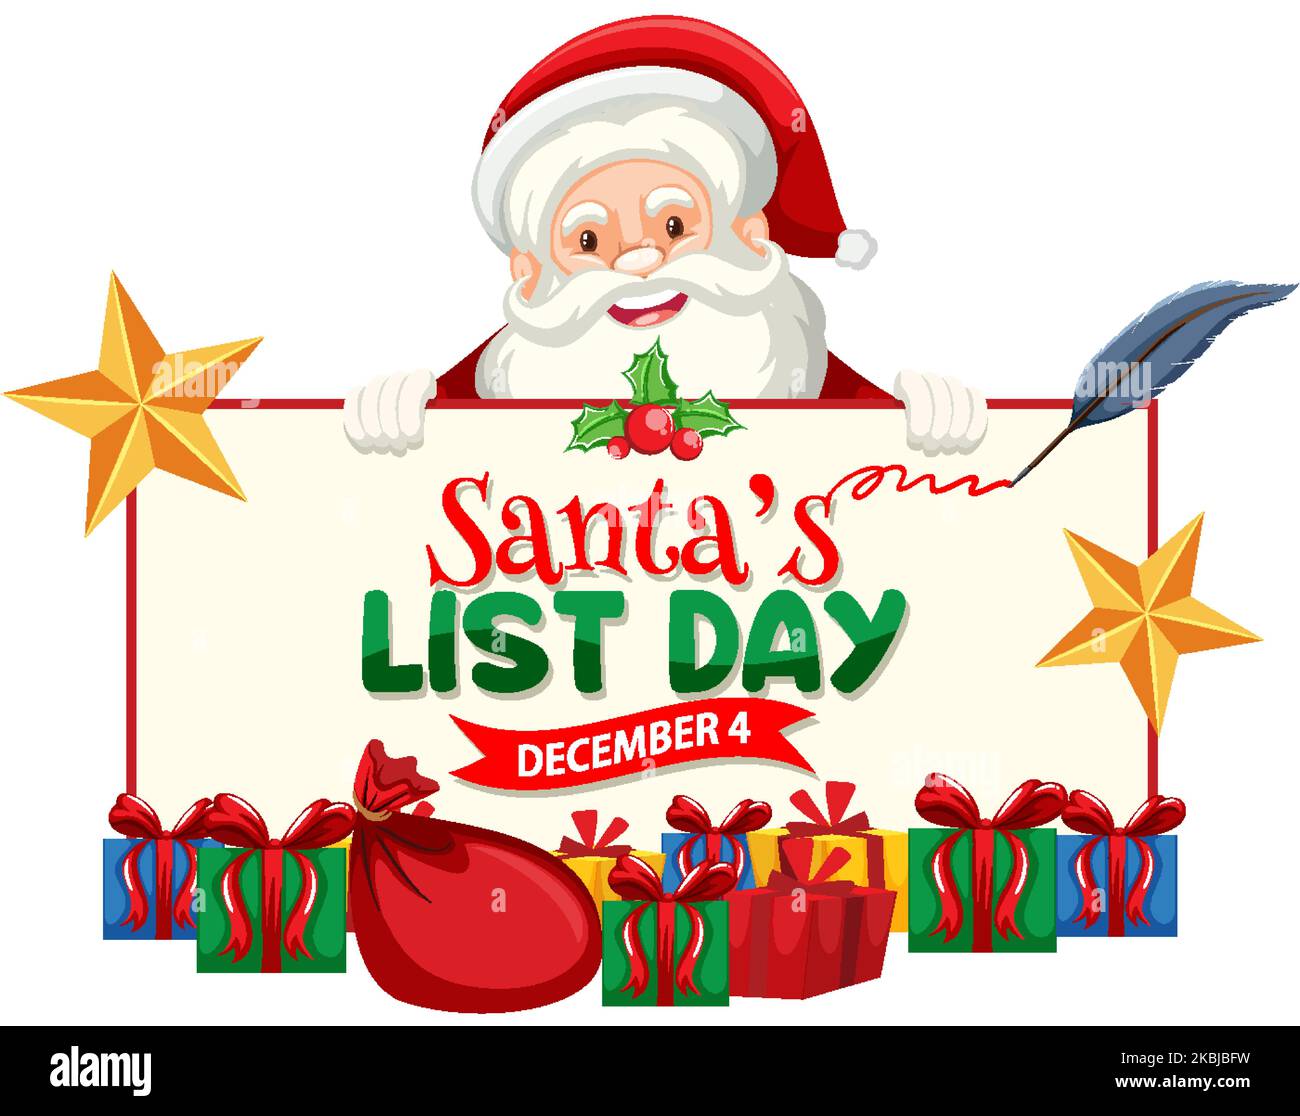 Santa's list day text banner design illustration Stock Vector Image